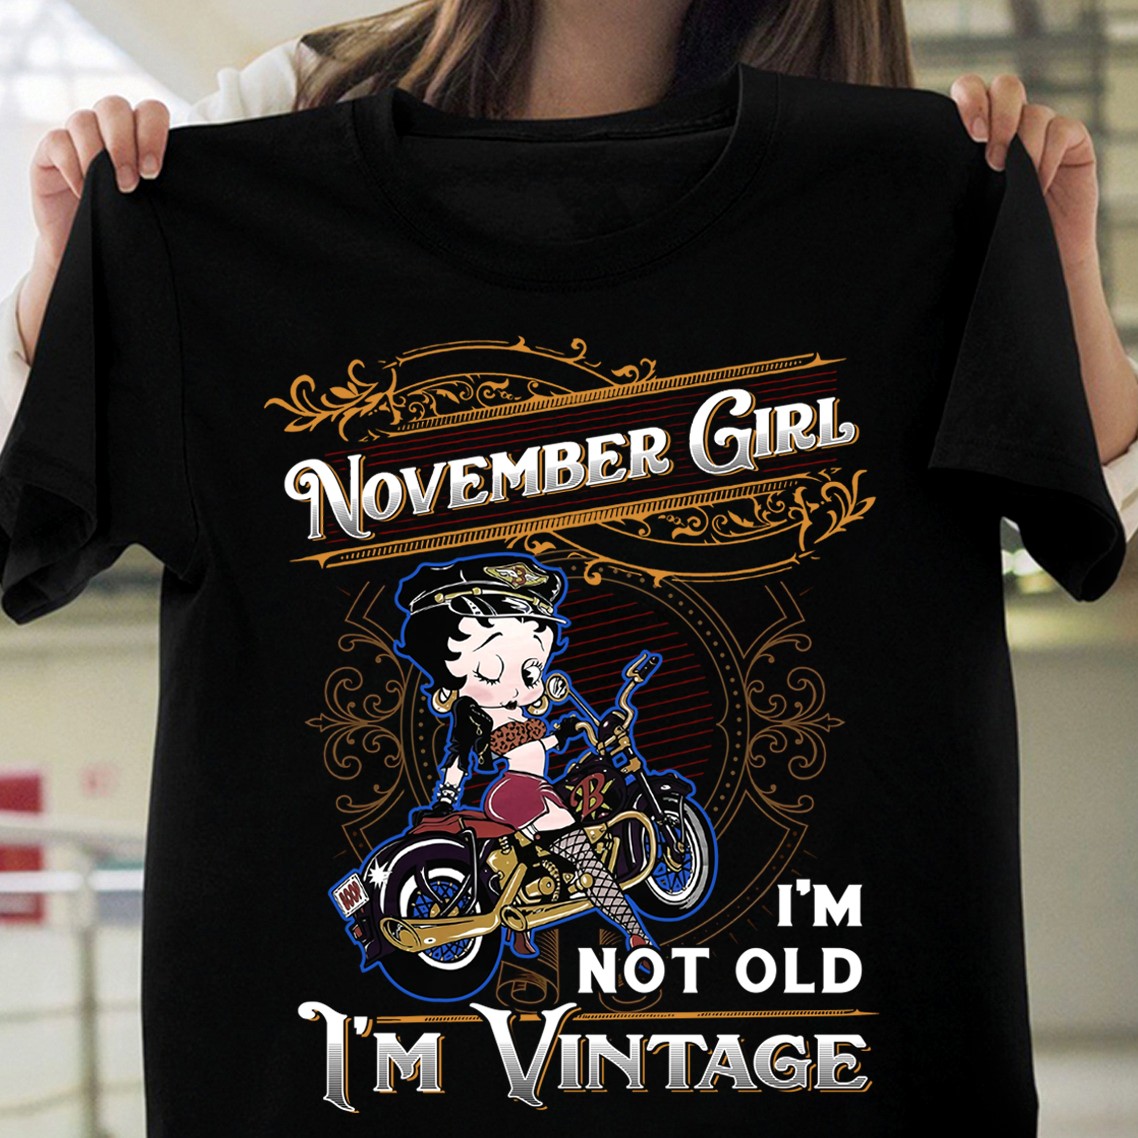 November girl I'm not old I'm vintage - Girl with motorcycle